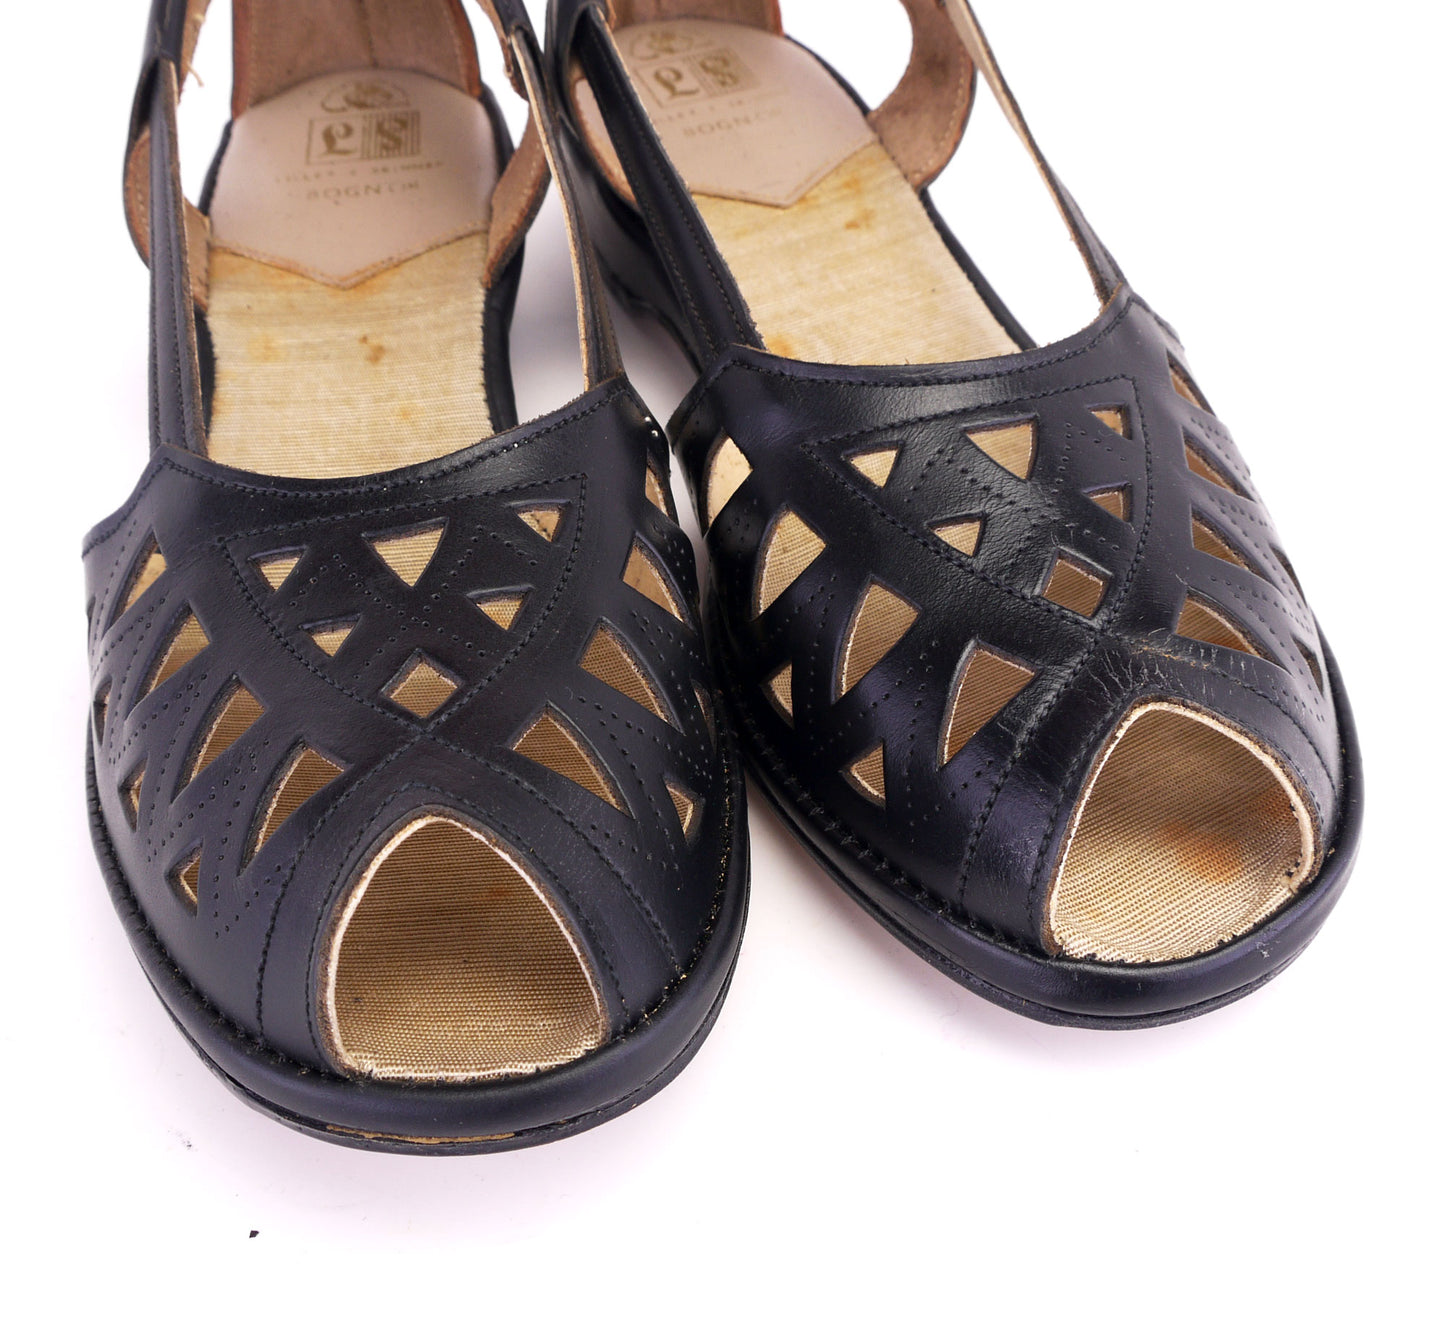 1950s BNIB Black Wedge Sandals by Lilley & Skinner UK 3.5